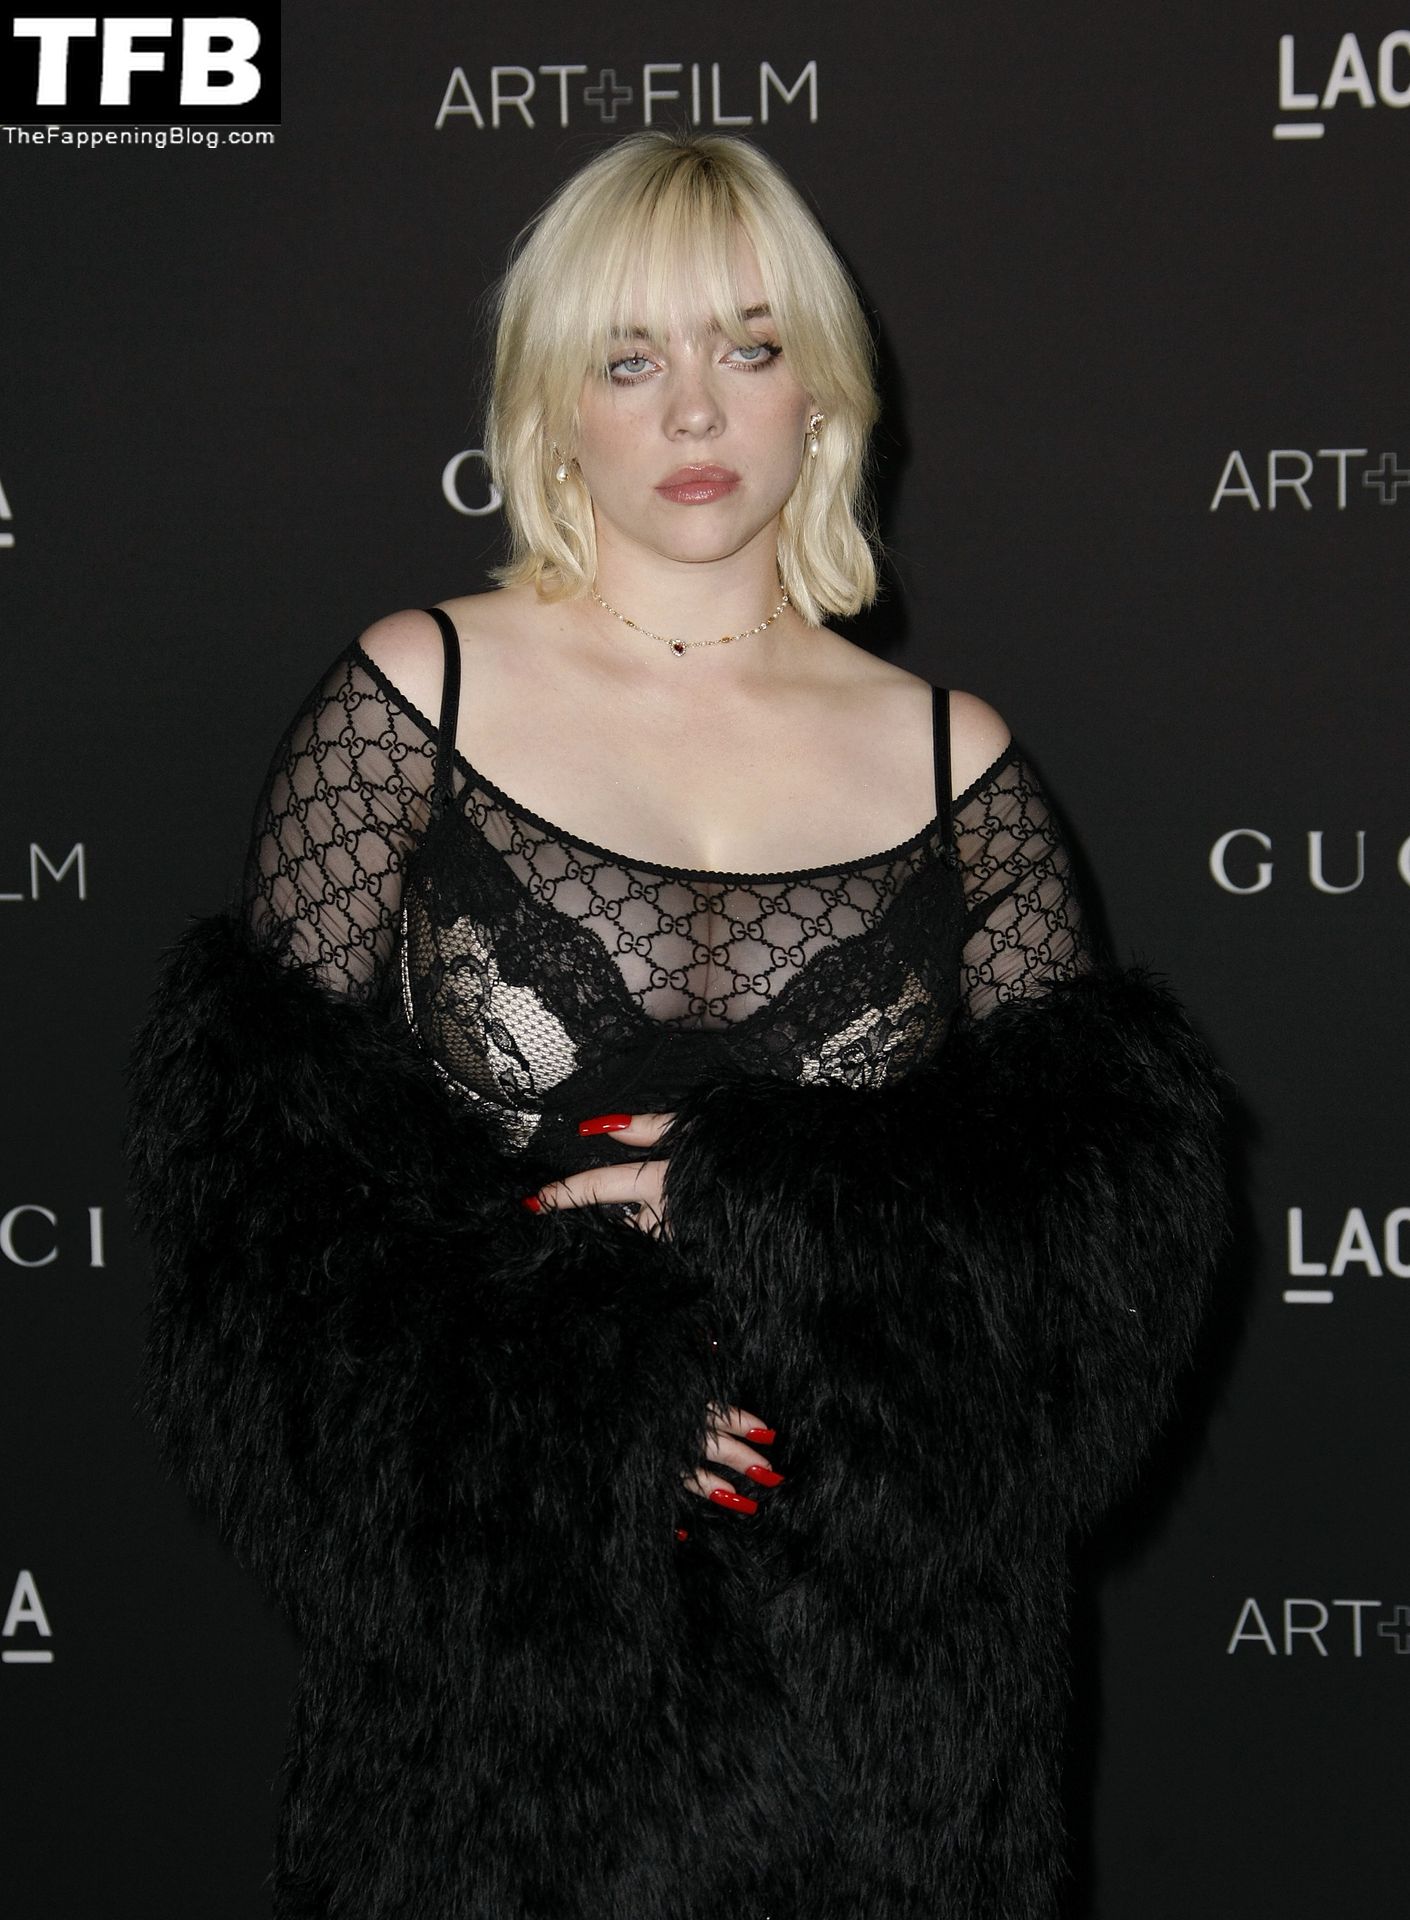 Billie Eilish Displays Her Sexy Boobs the 10th Annual LACMA ART+FILM Gala (
37 Photos)